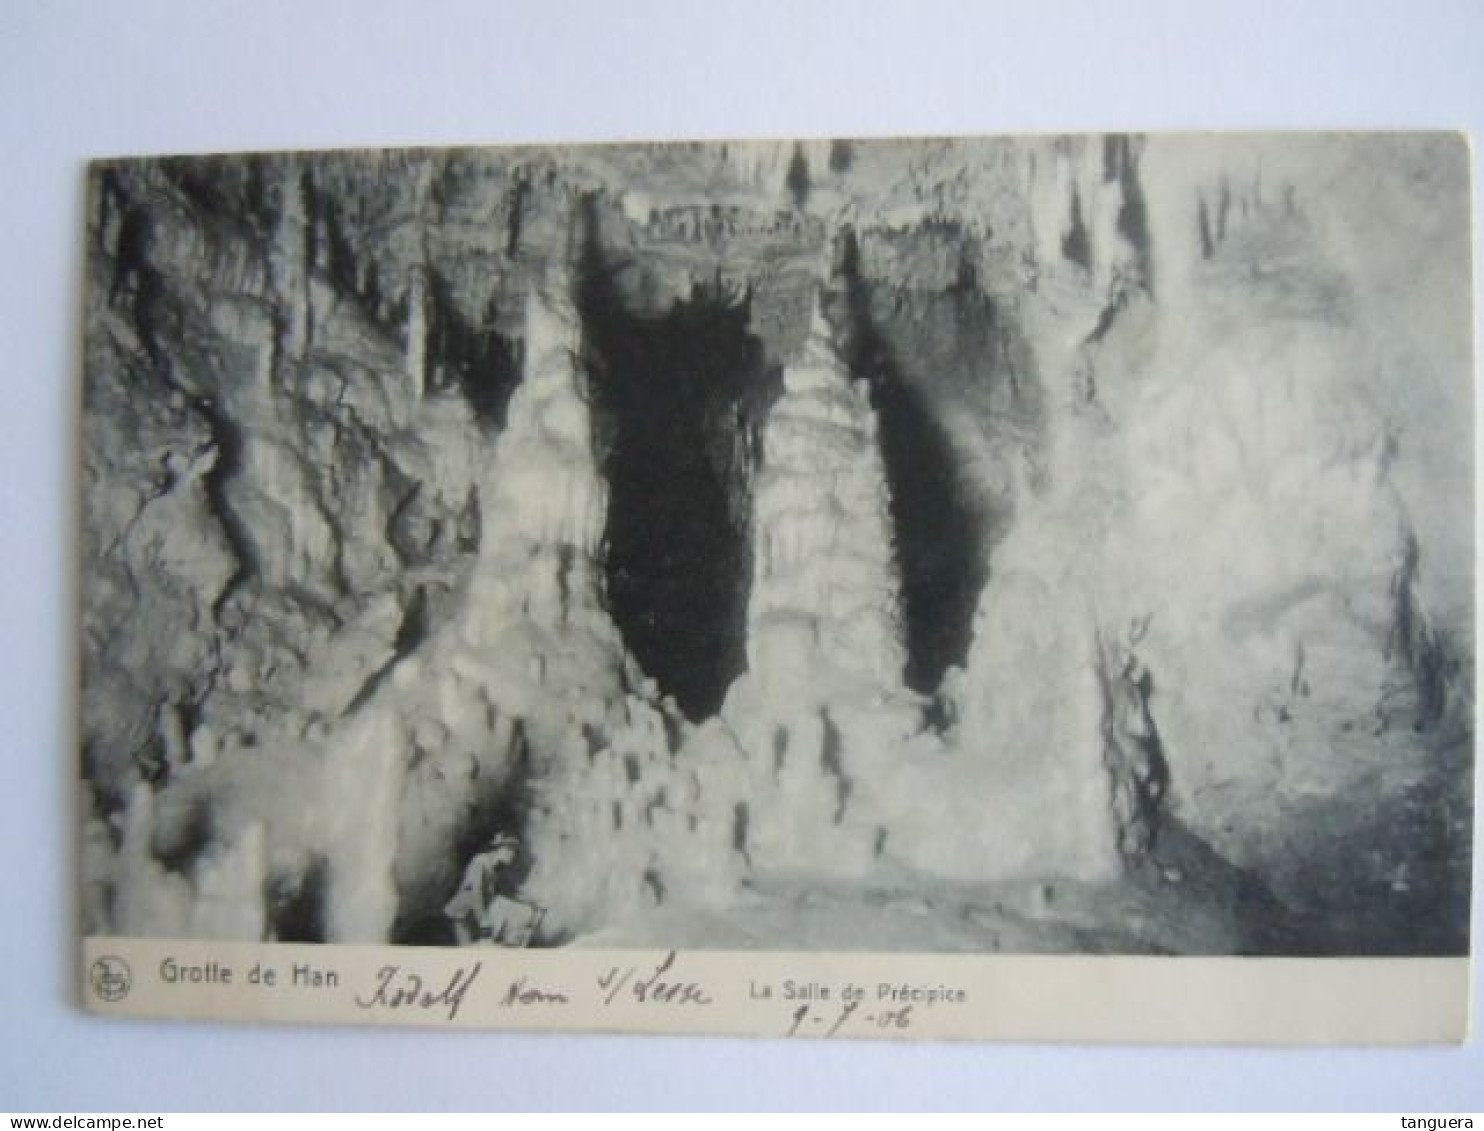 8 cp Grotte de Han circulée 1906 cachet Hotel Bellevue  (701)